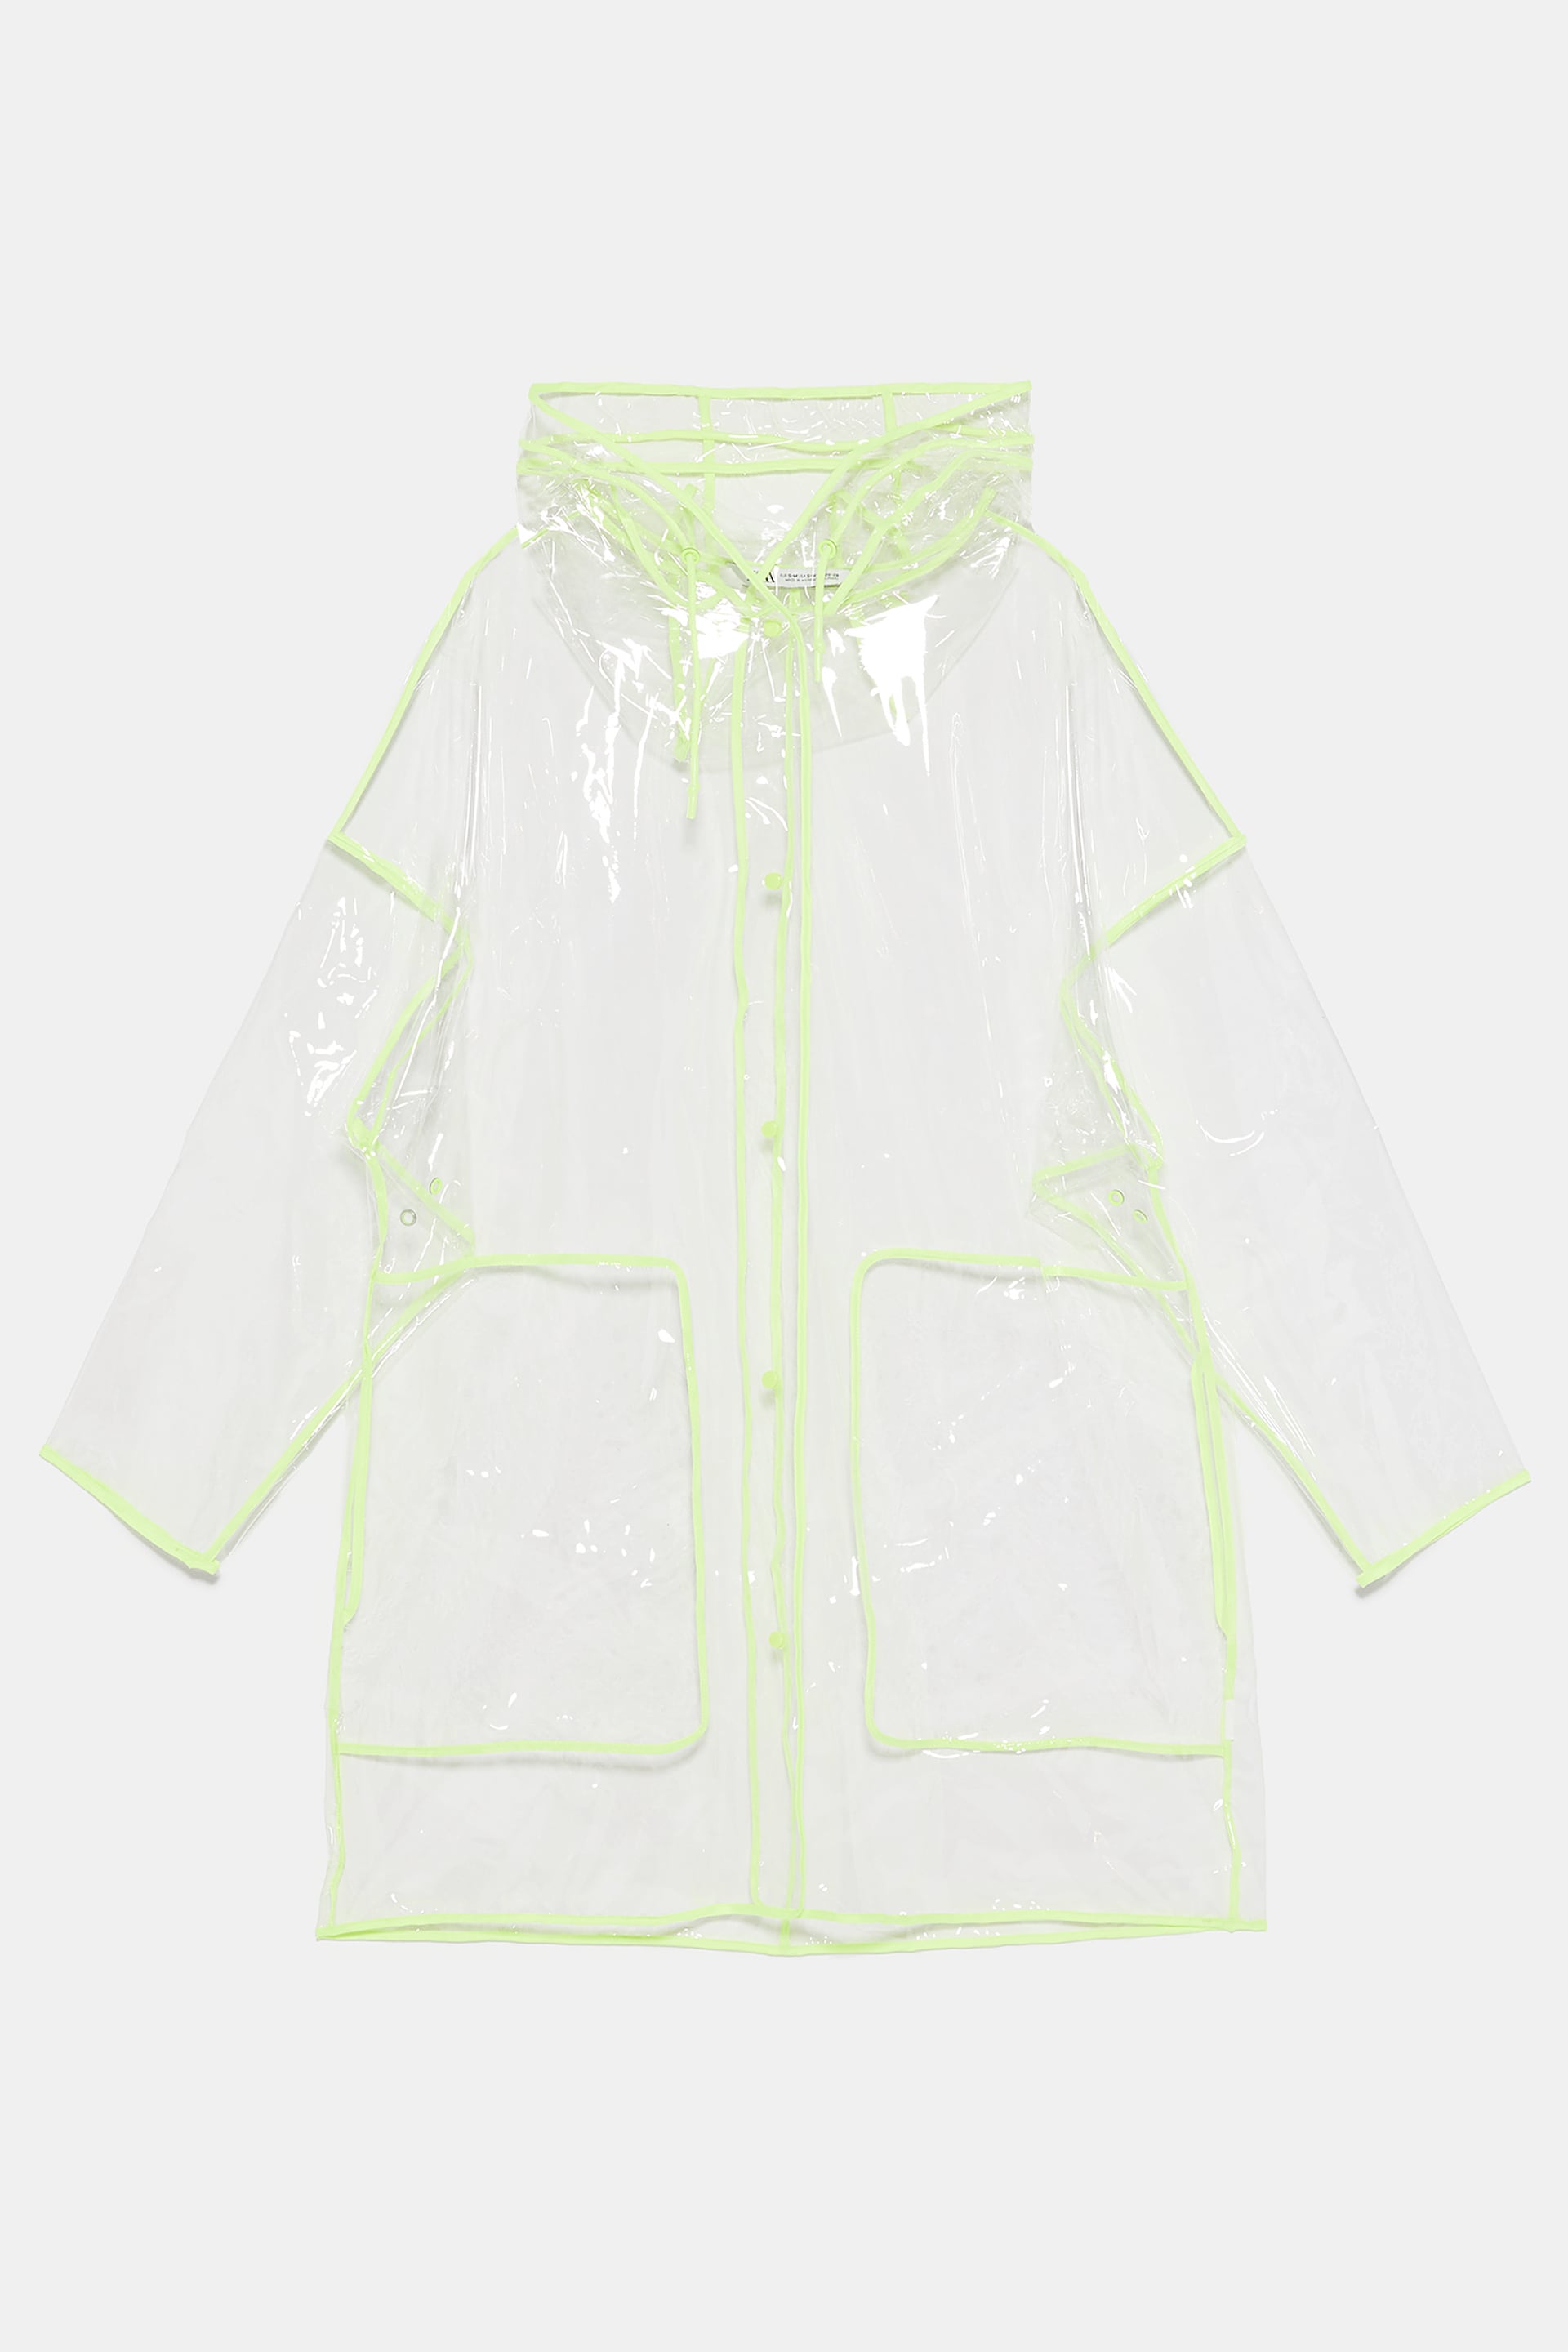 Transparent raincoat for small handbags